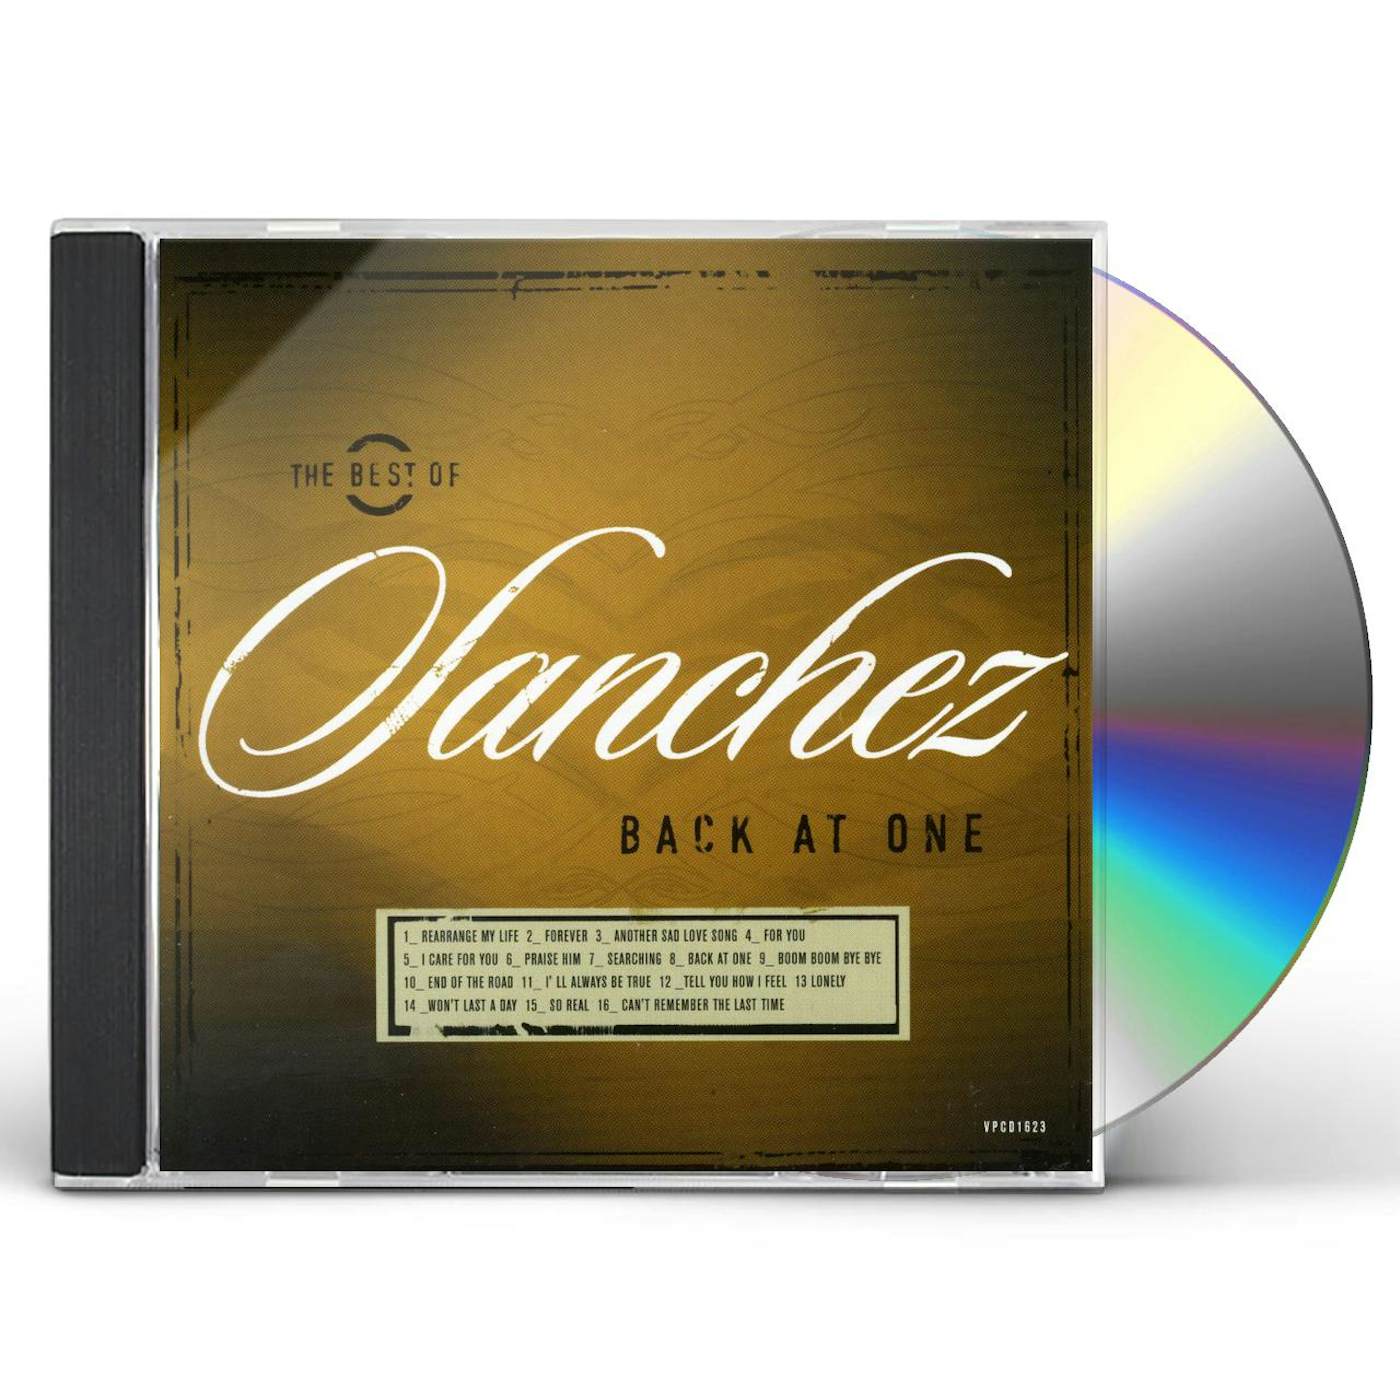 BEST OF SANCHEZ: BACK AT ONE CD